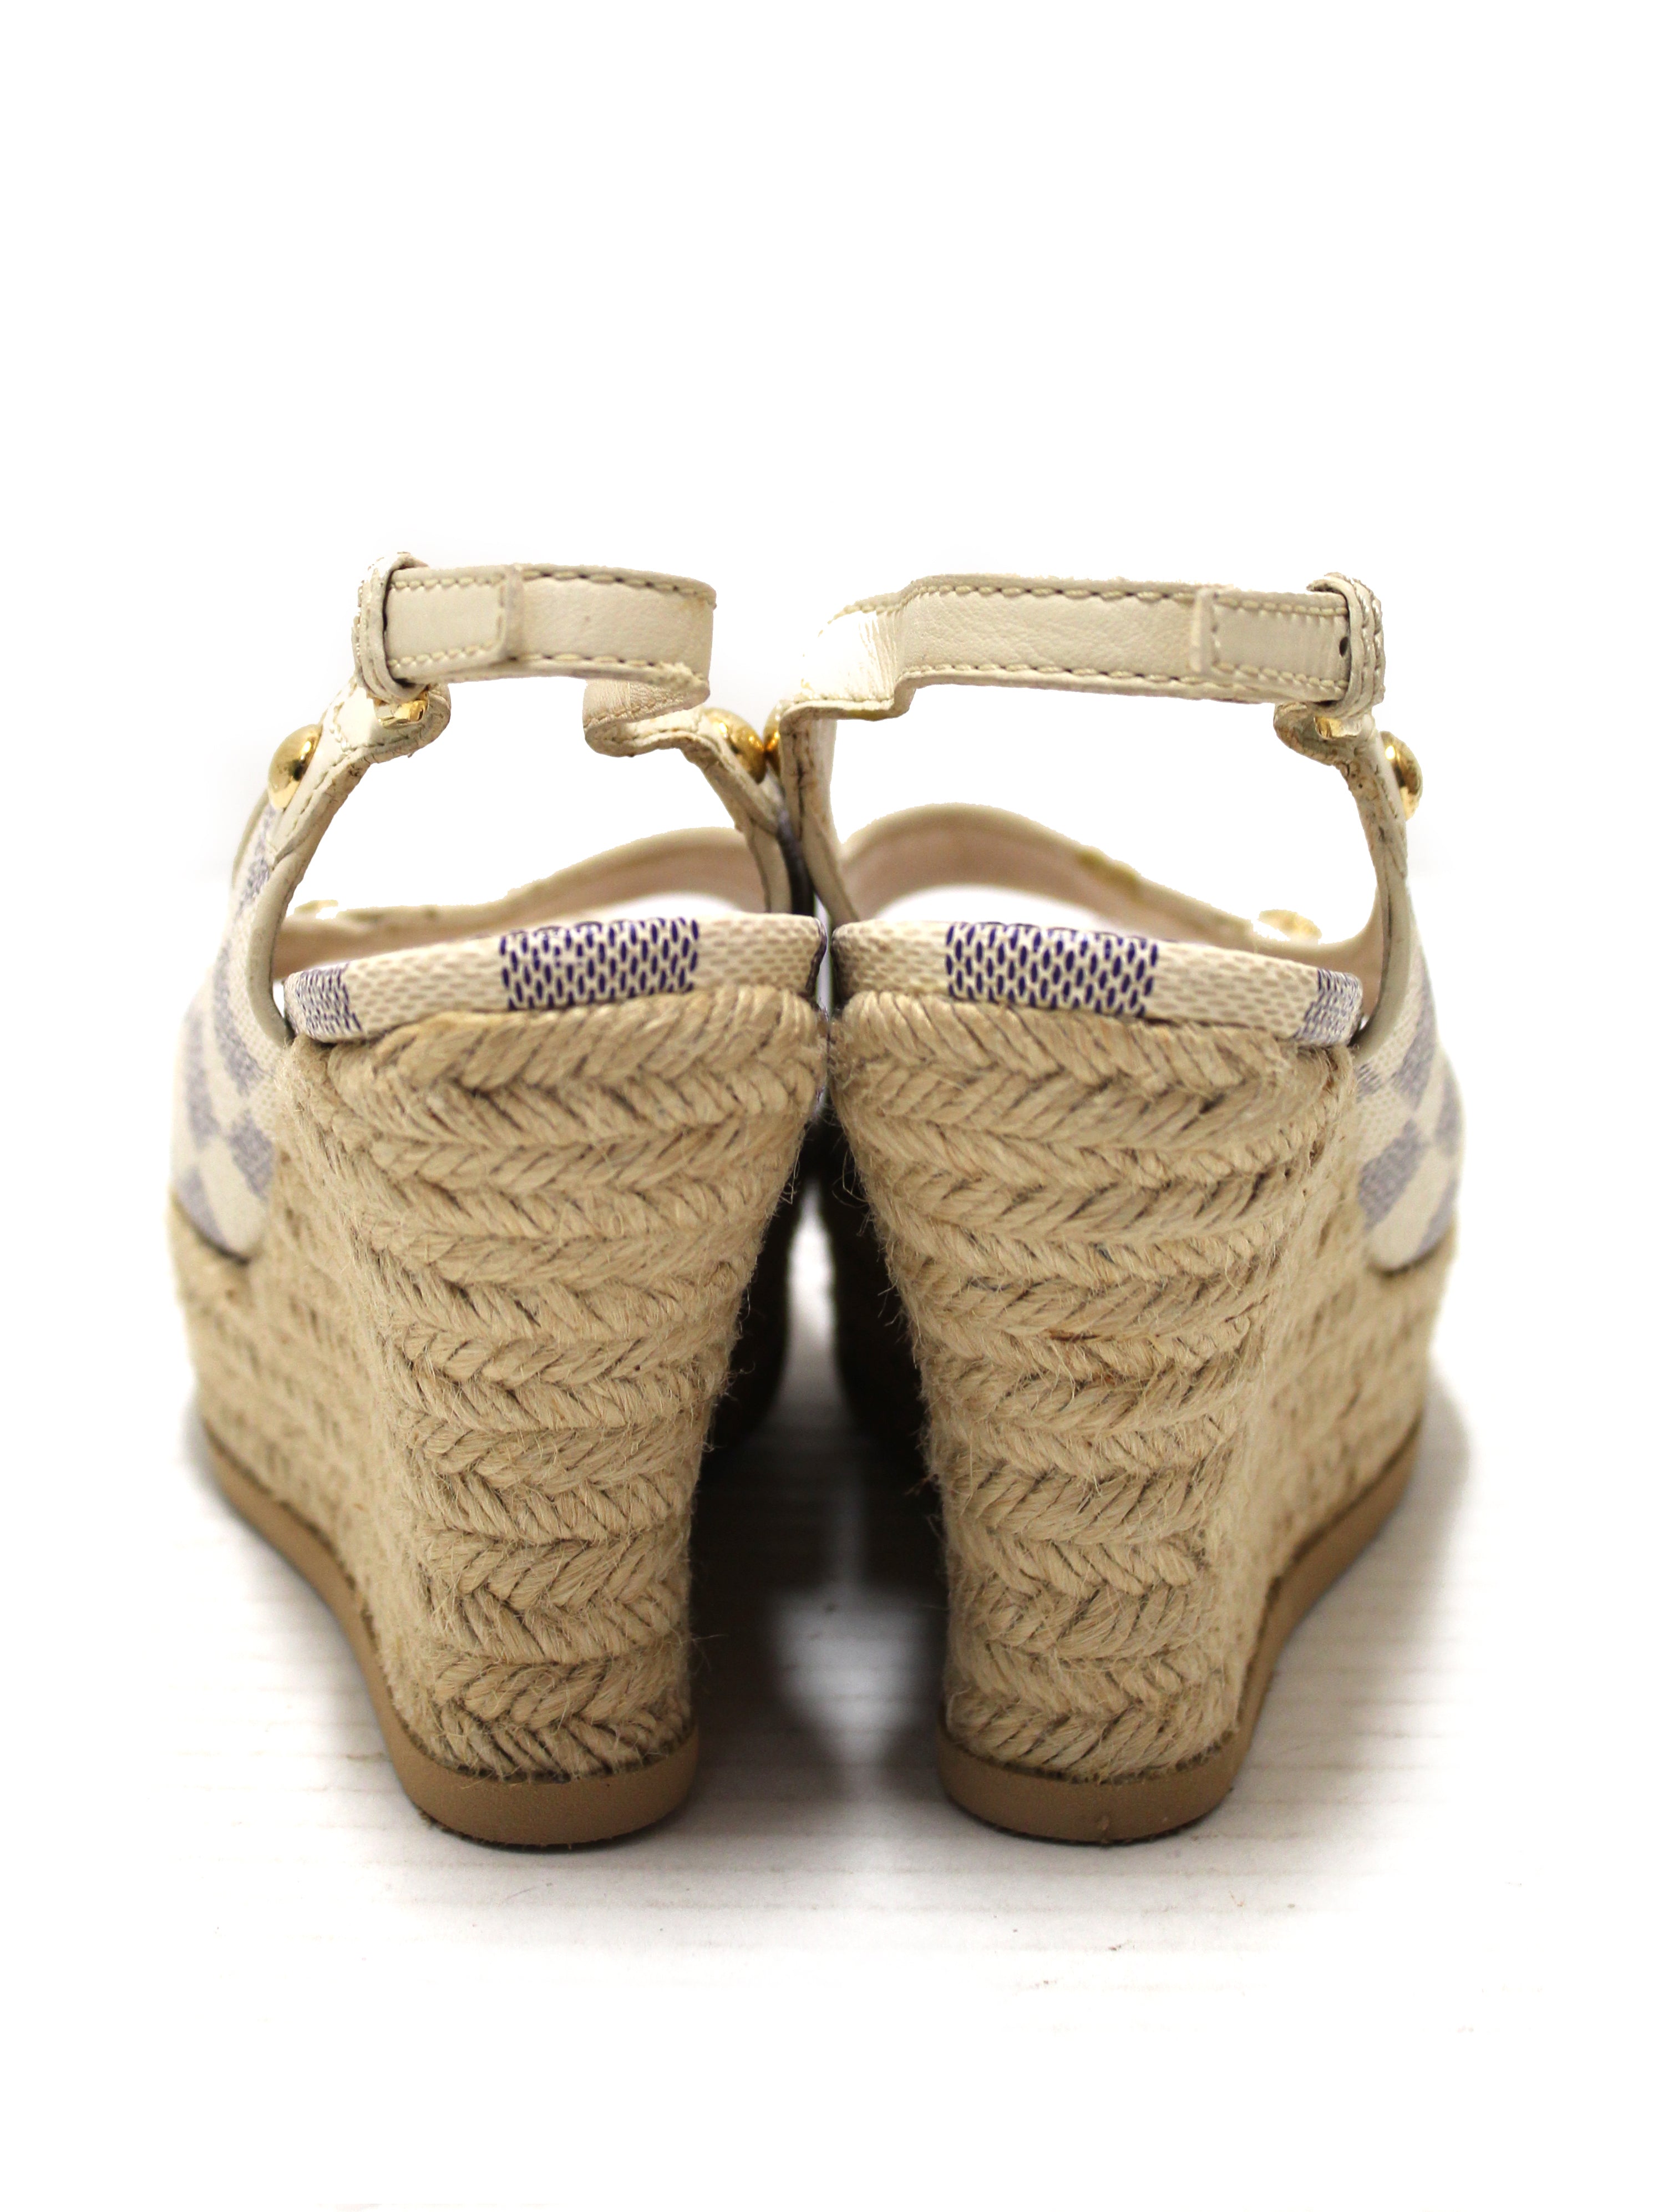 LOUIS VUITTON Damier Azur Ankle Strap Sandals EUR36 Used From Japan